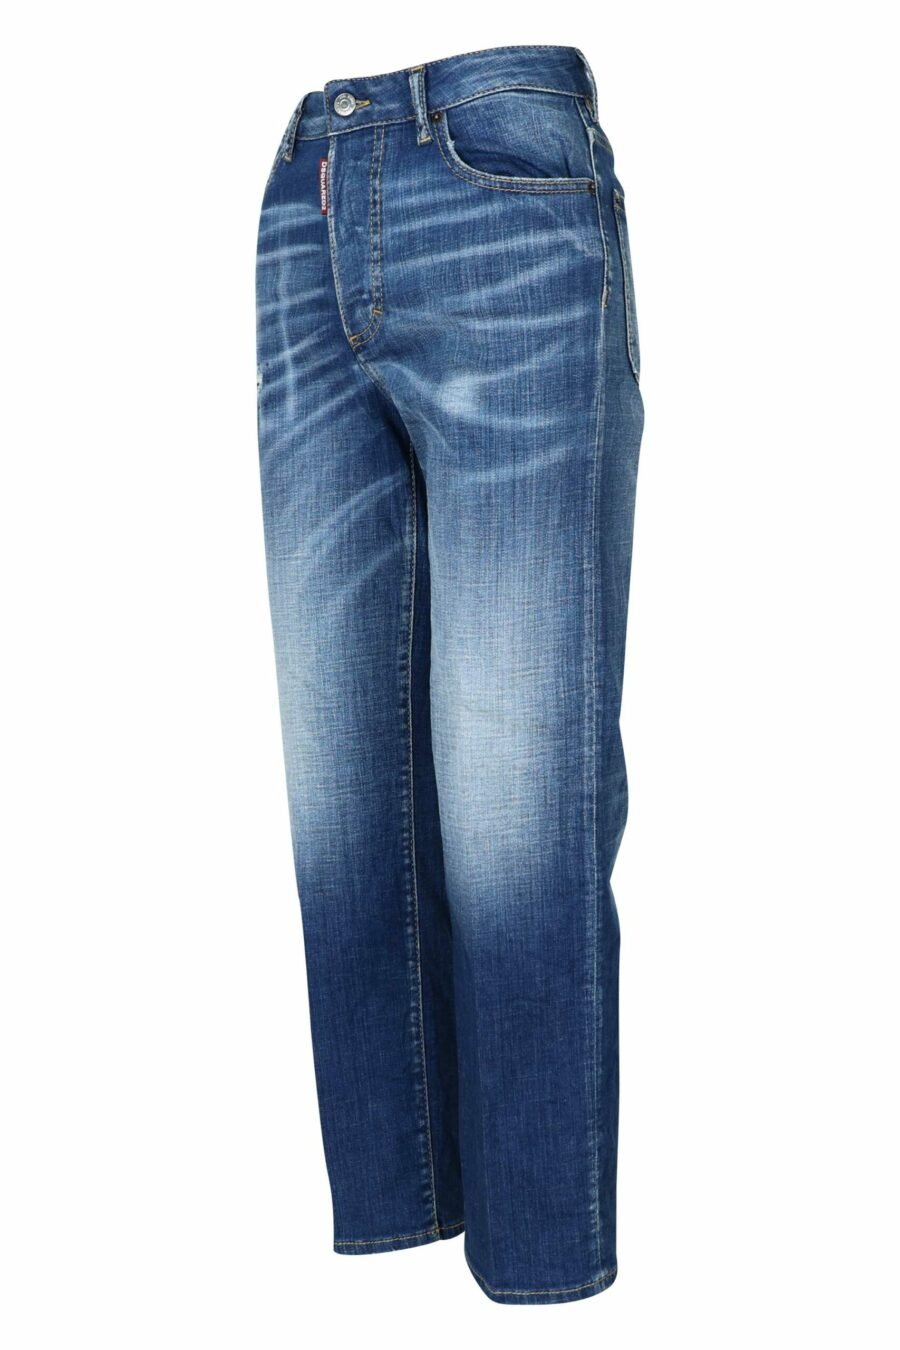 Blue "boston jean" worn trousers - 8054148460044 1 scaled